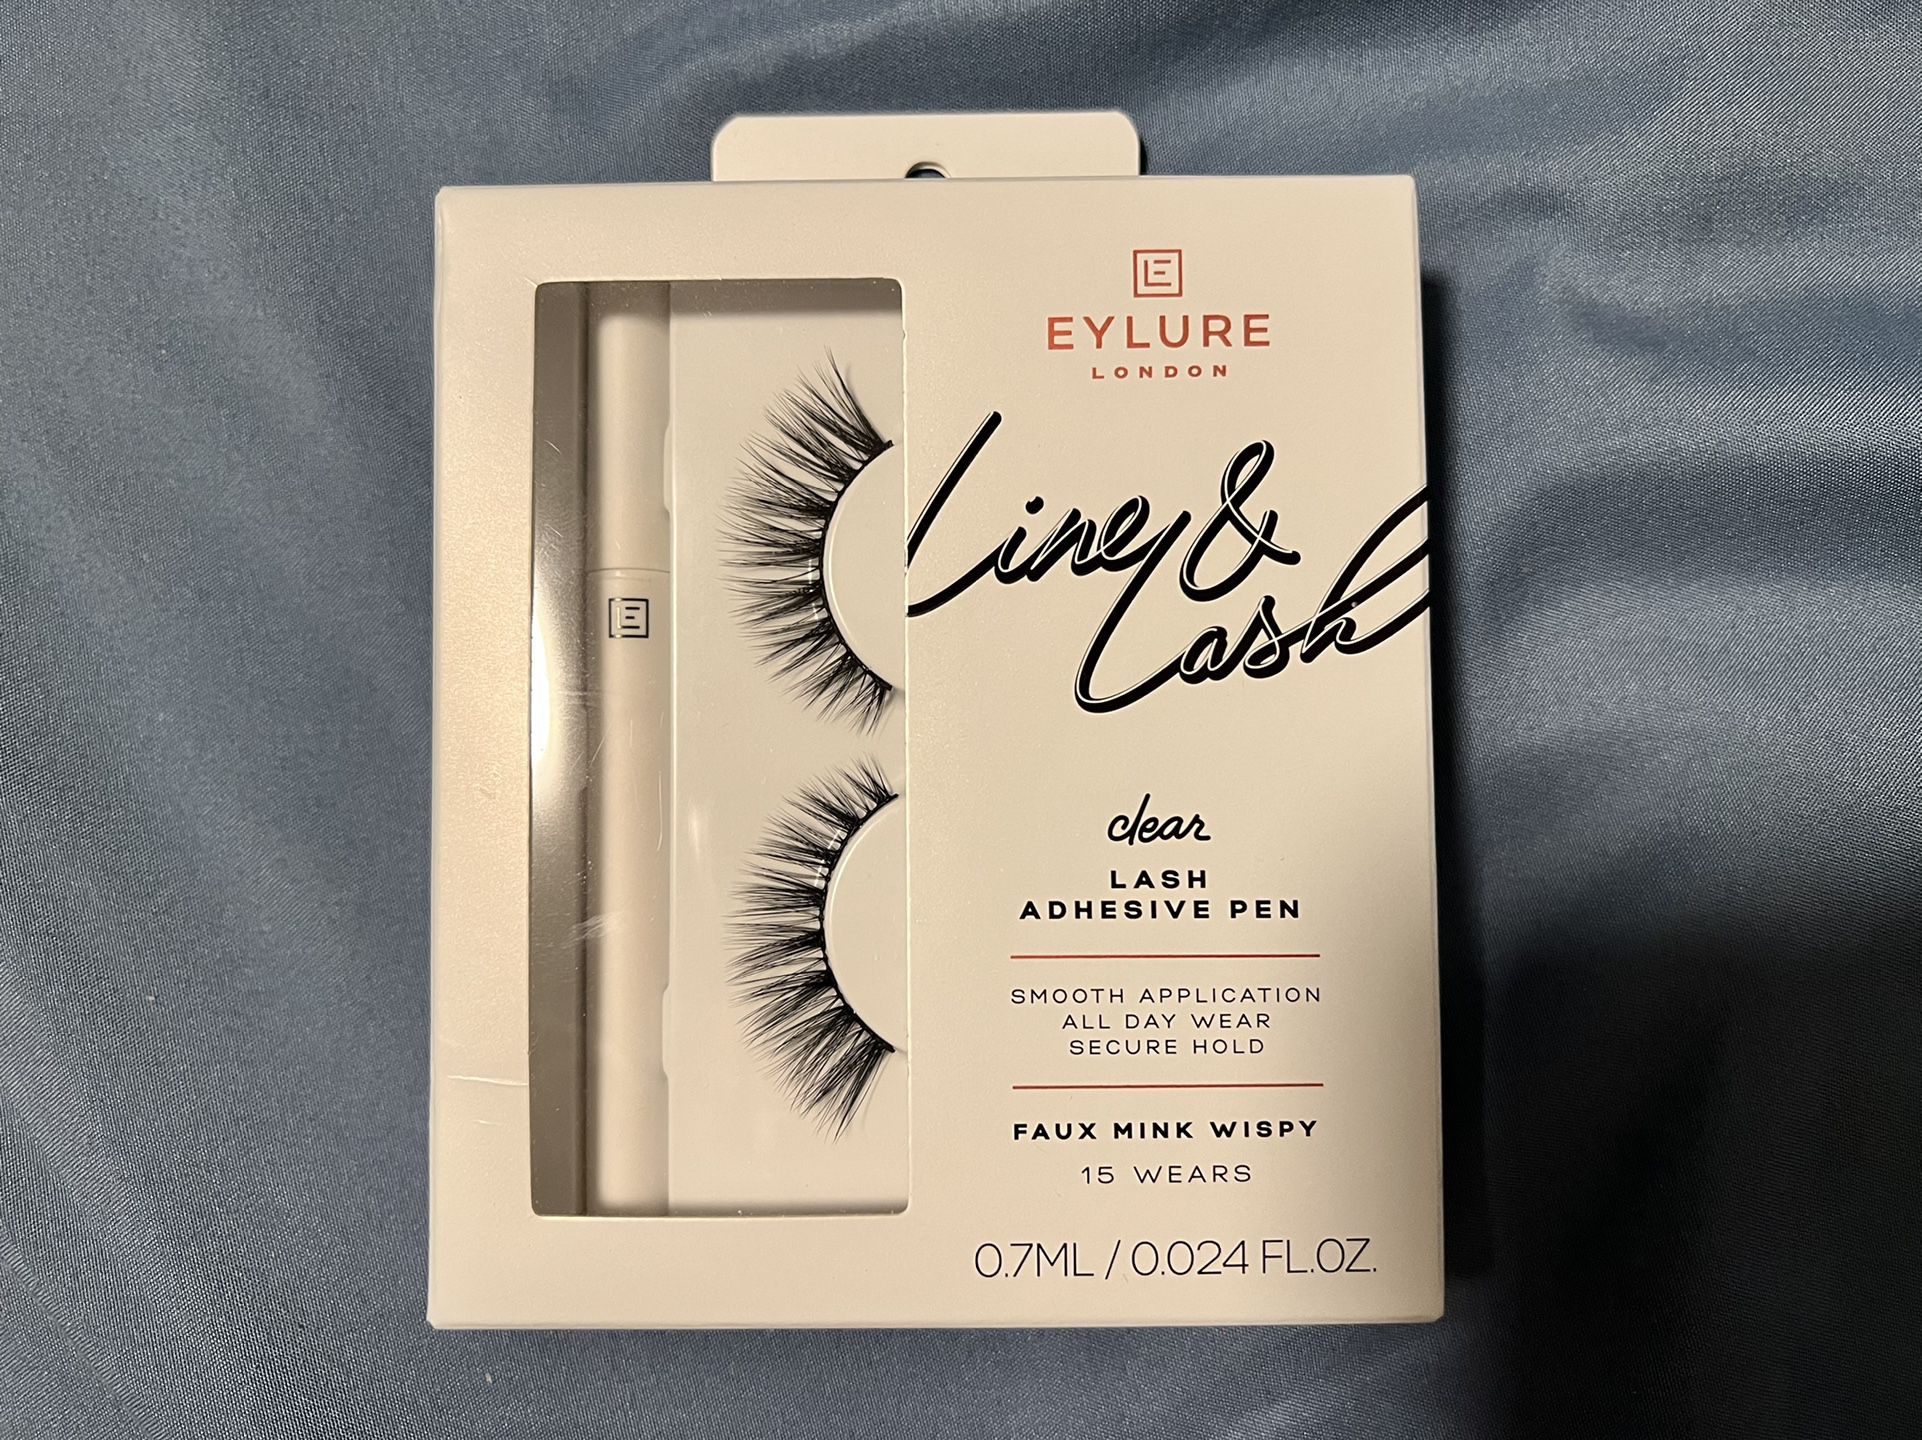 Brand New Eylure London Eyelash And Adhesive Pen